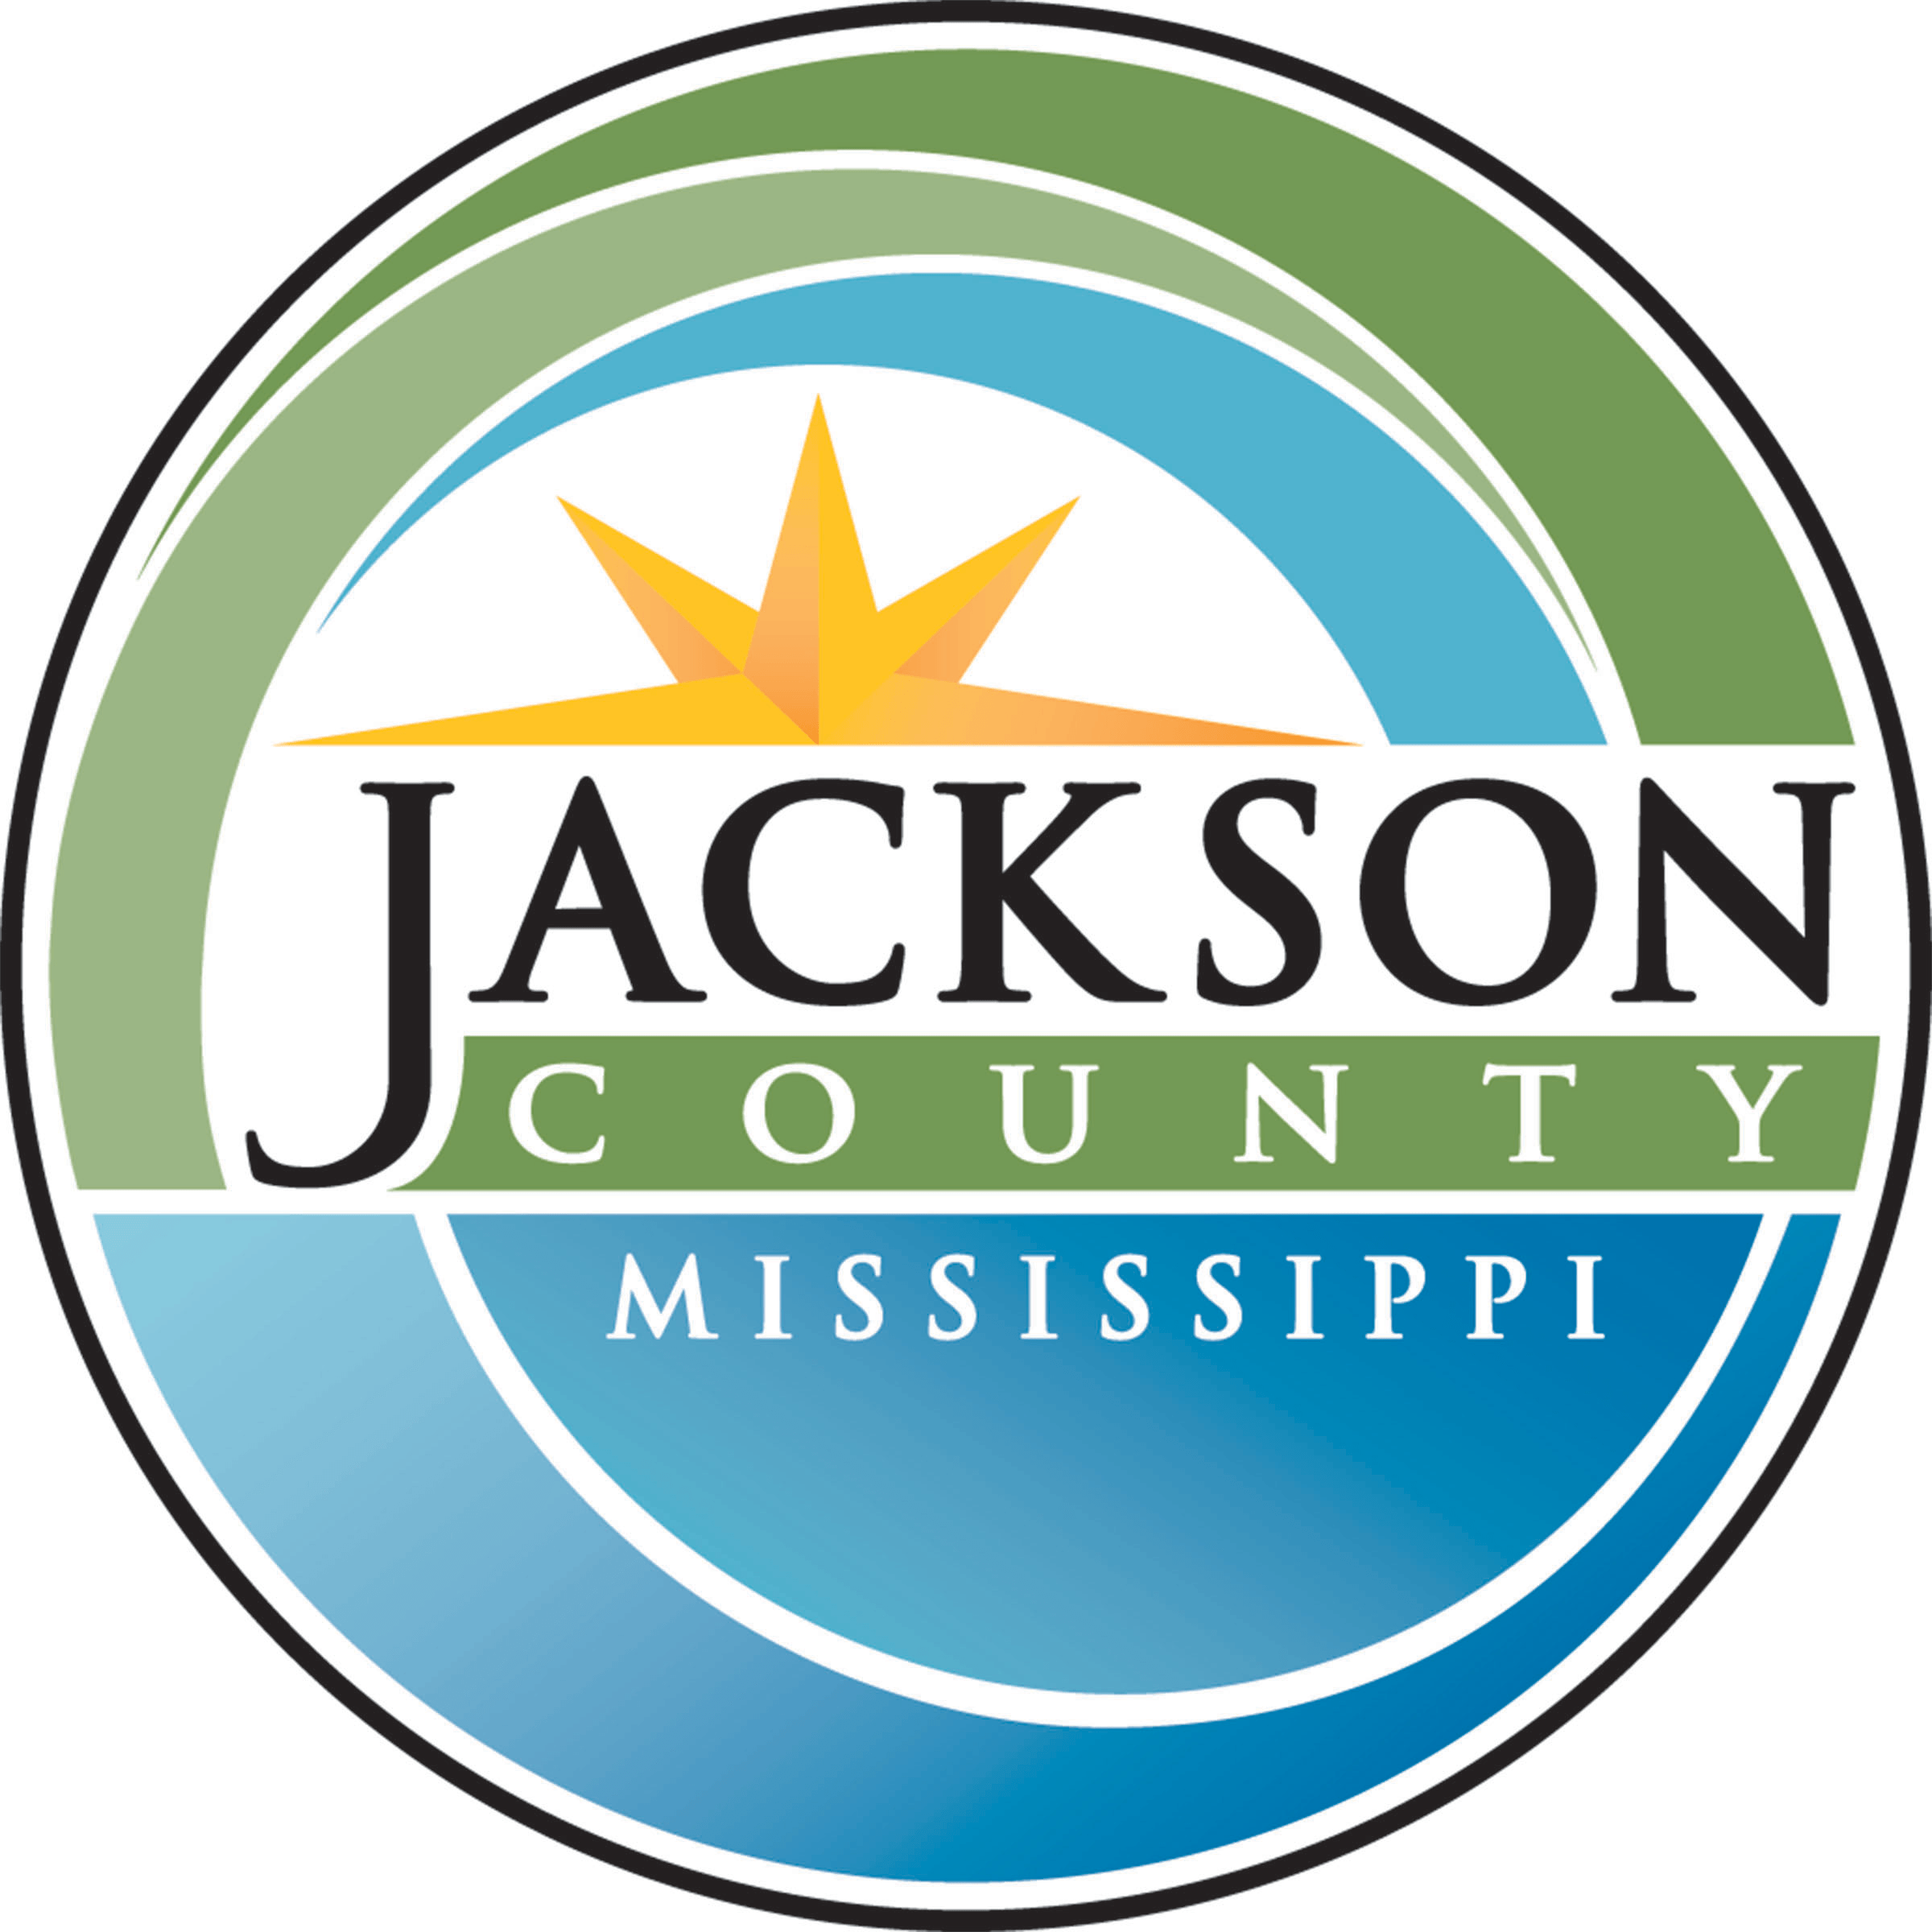 County Logo - Jackson county board of supervisors logo - Peter Anderson Festival